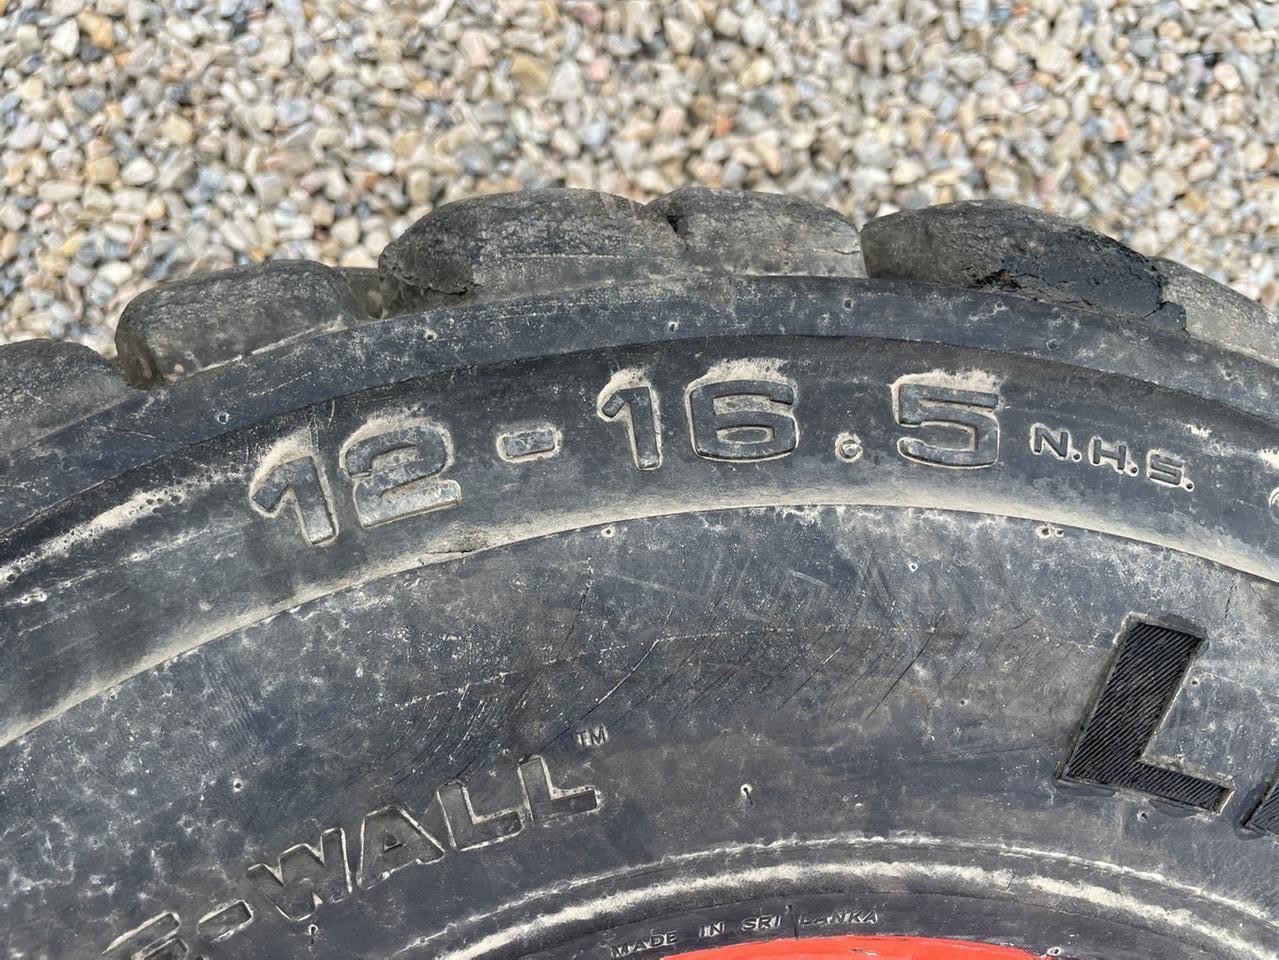 Bobcat 12-16.5 Skid Steer Tires On Rims